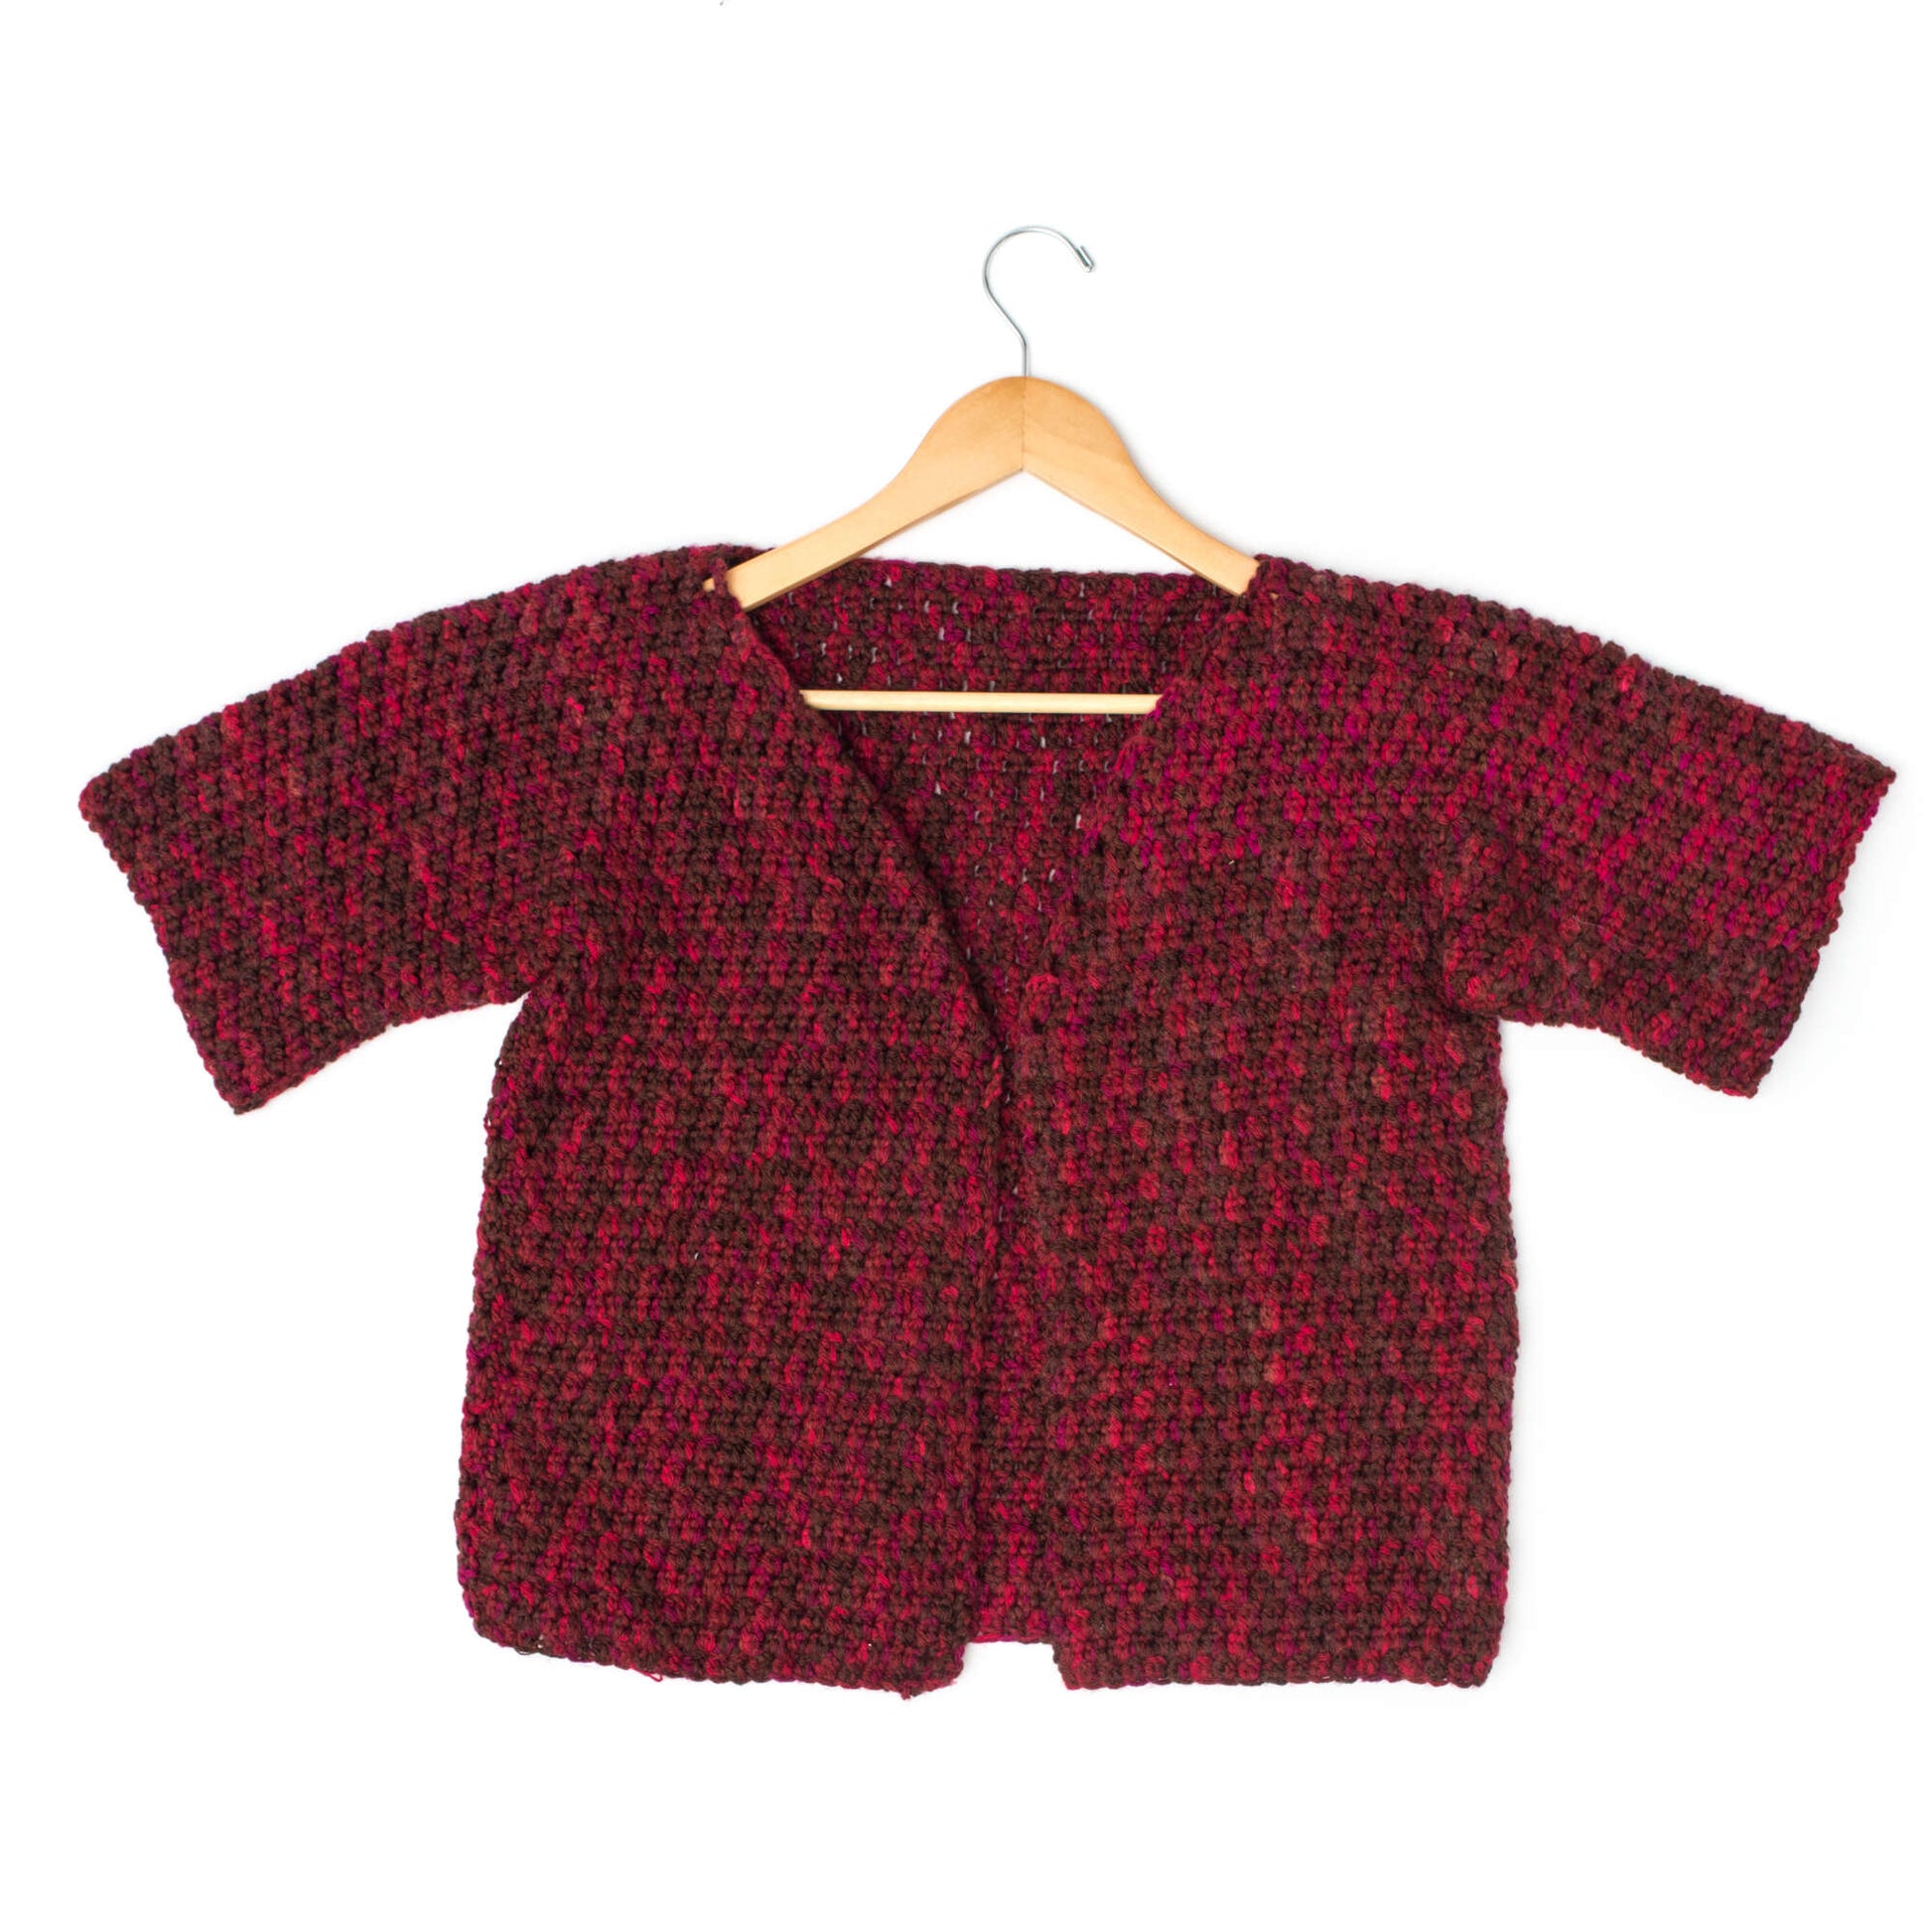 Free Caron Anywhere Short-Sleeved Cardi Crochet Pattern